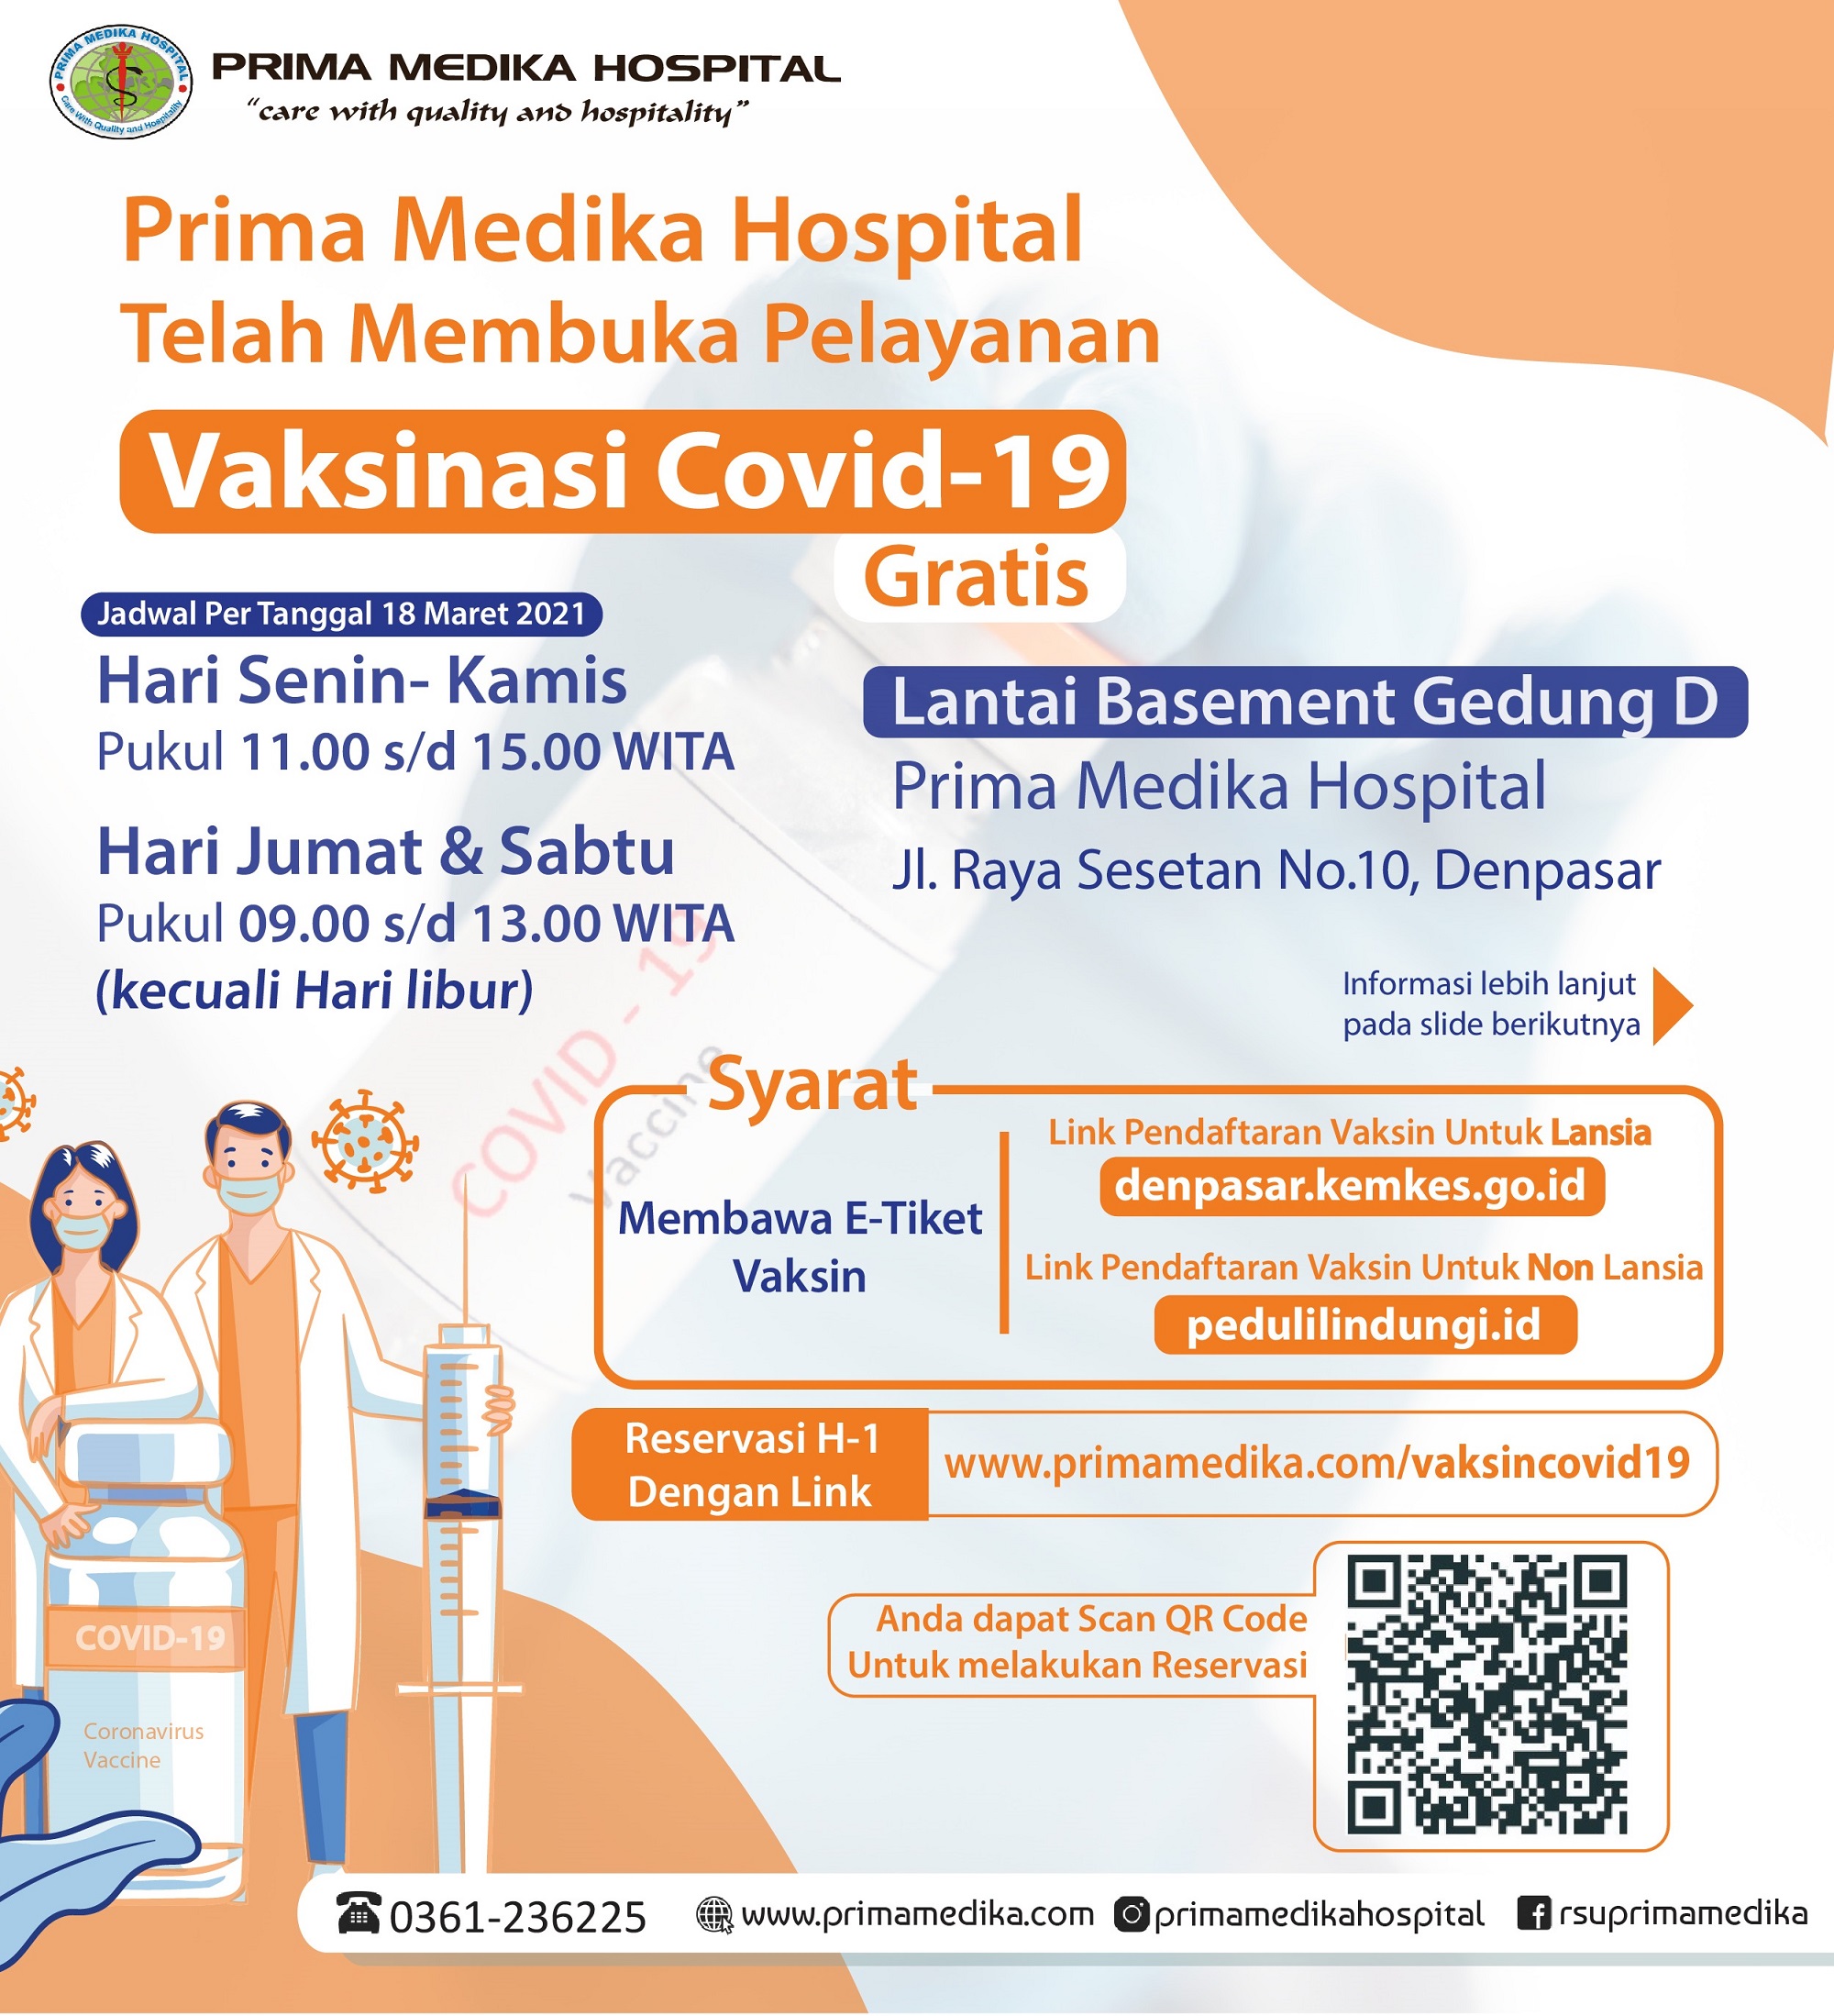 Prima Medika Hospital Serving Covid-19 Vaccination Services 